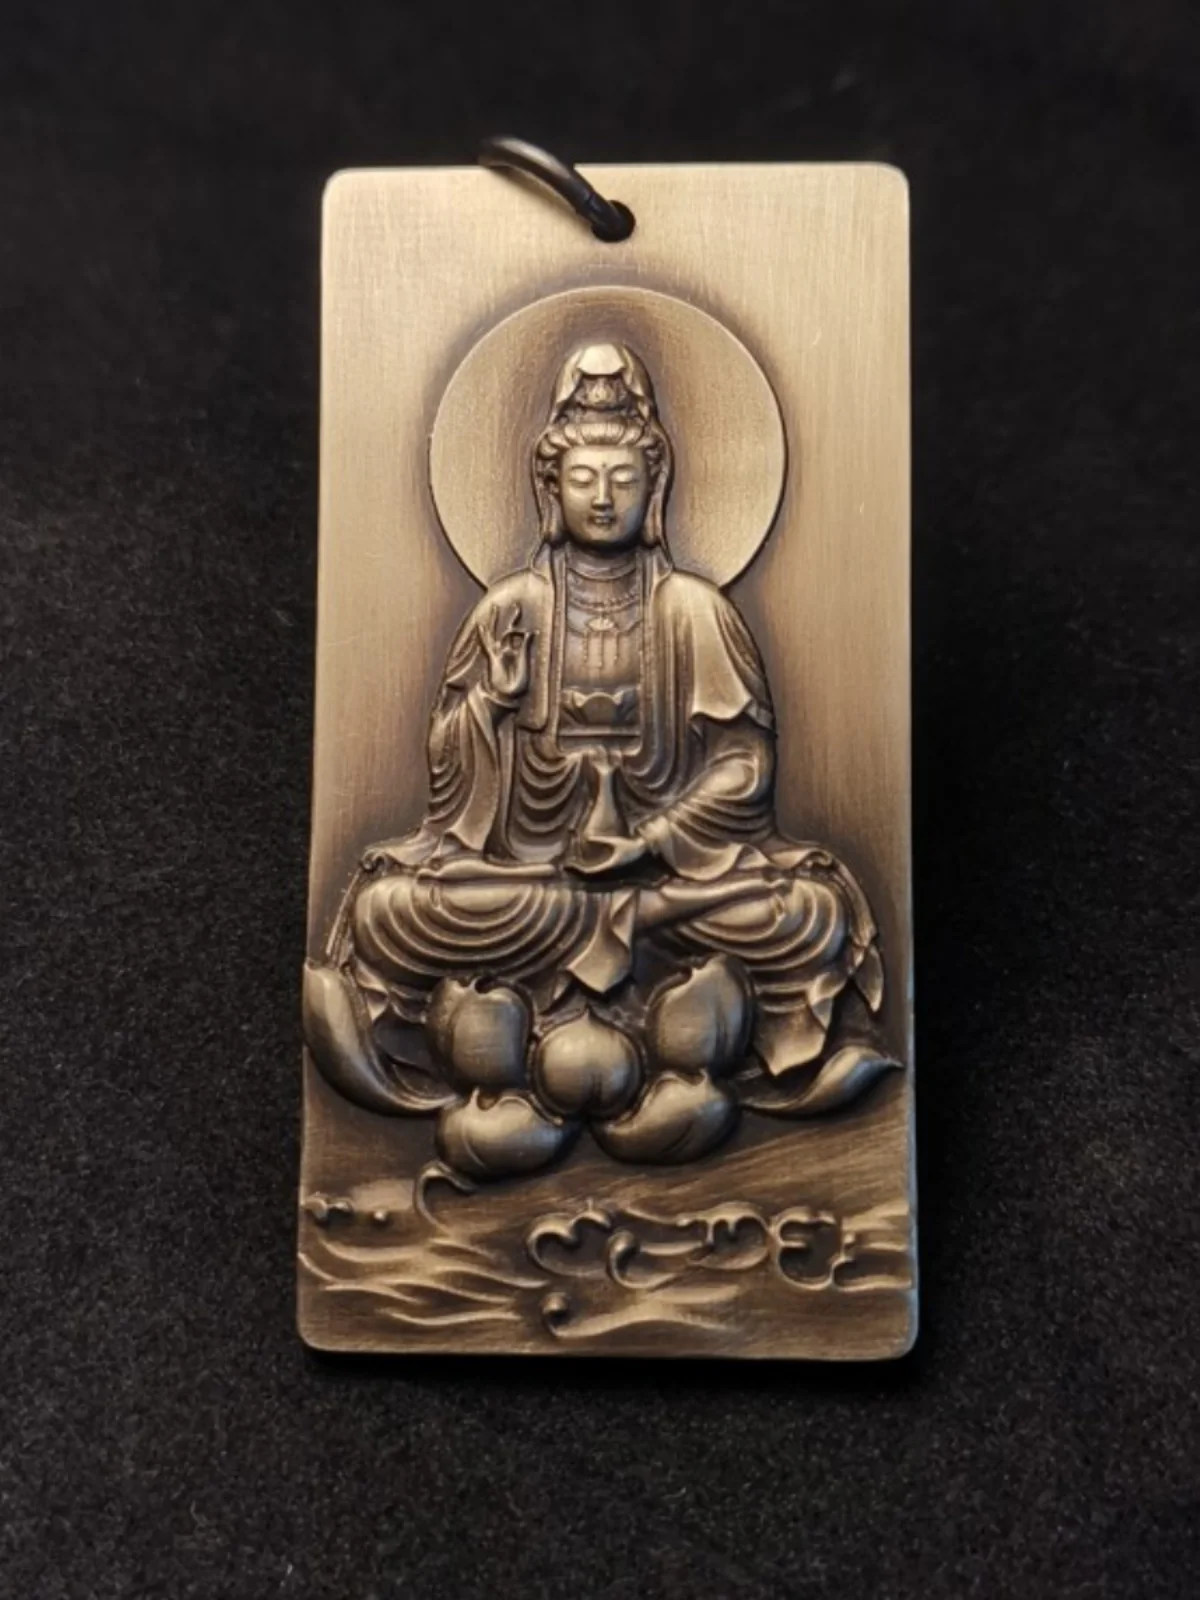 

Sipei bronze carving Nanhai Shuiyue Guanyin Bodhisattva all brass Buddha pendant pendant square card to send lanyard.